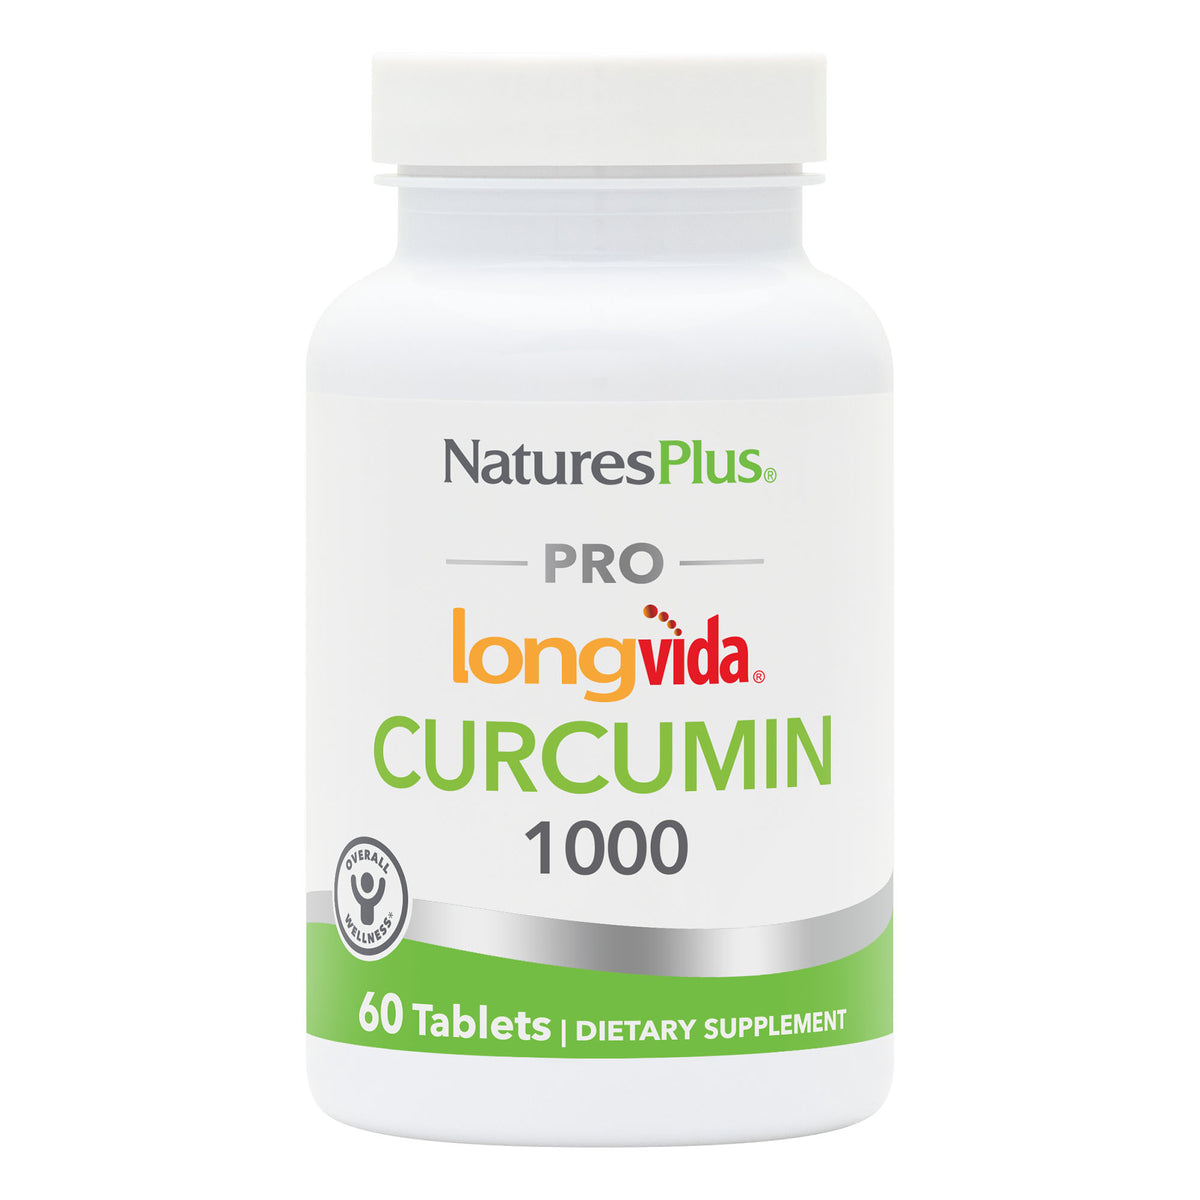 product image of NaturesPlus PRO Curcumin Longvida® 1000 MG Tablets containing 60 Count